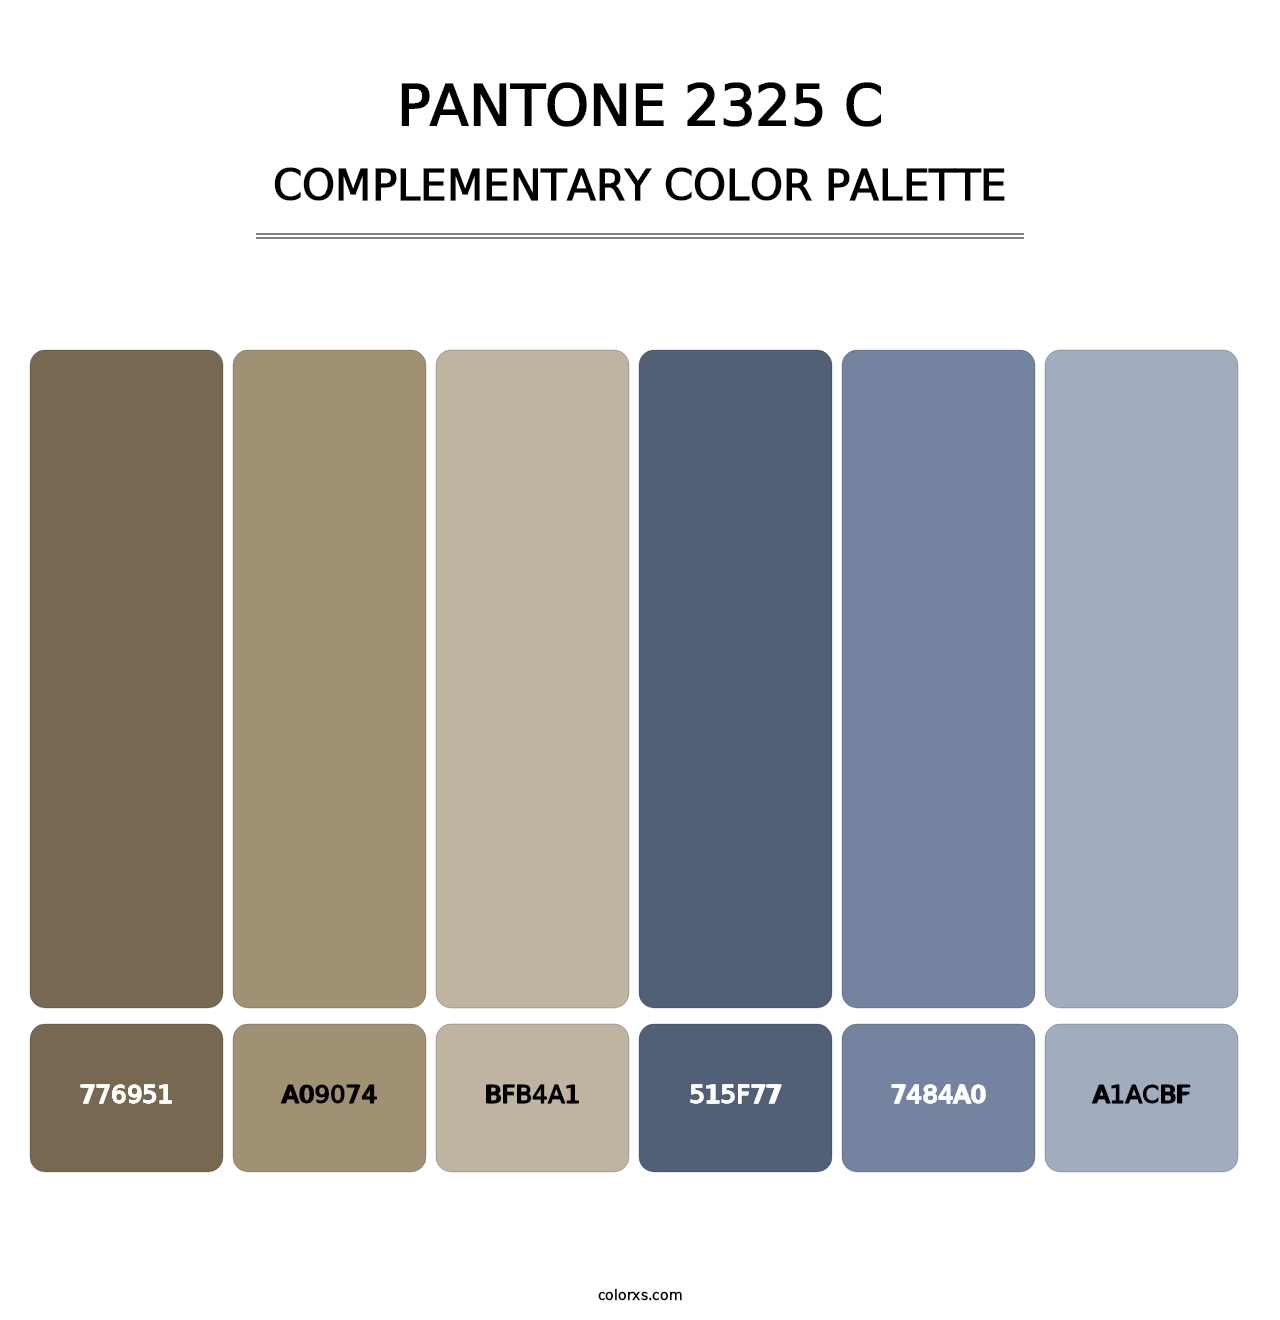 PANTONE 2325 C - Complementary Color Palette